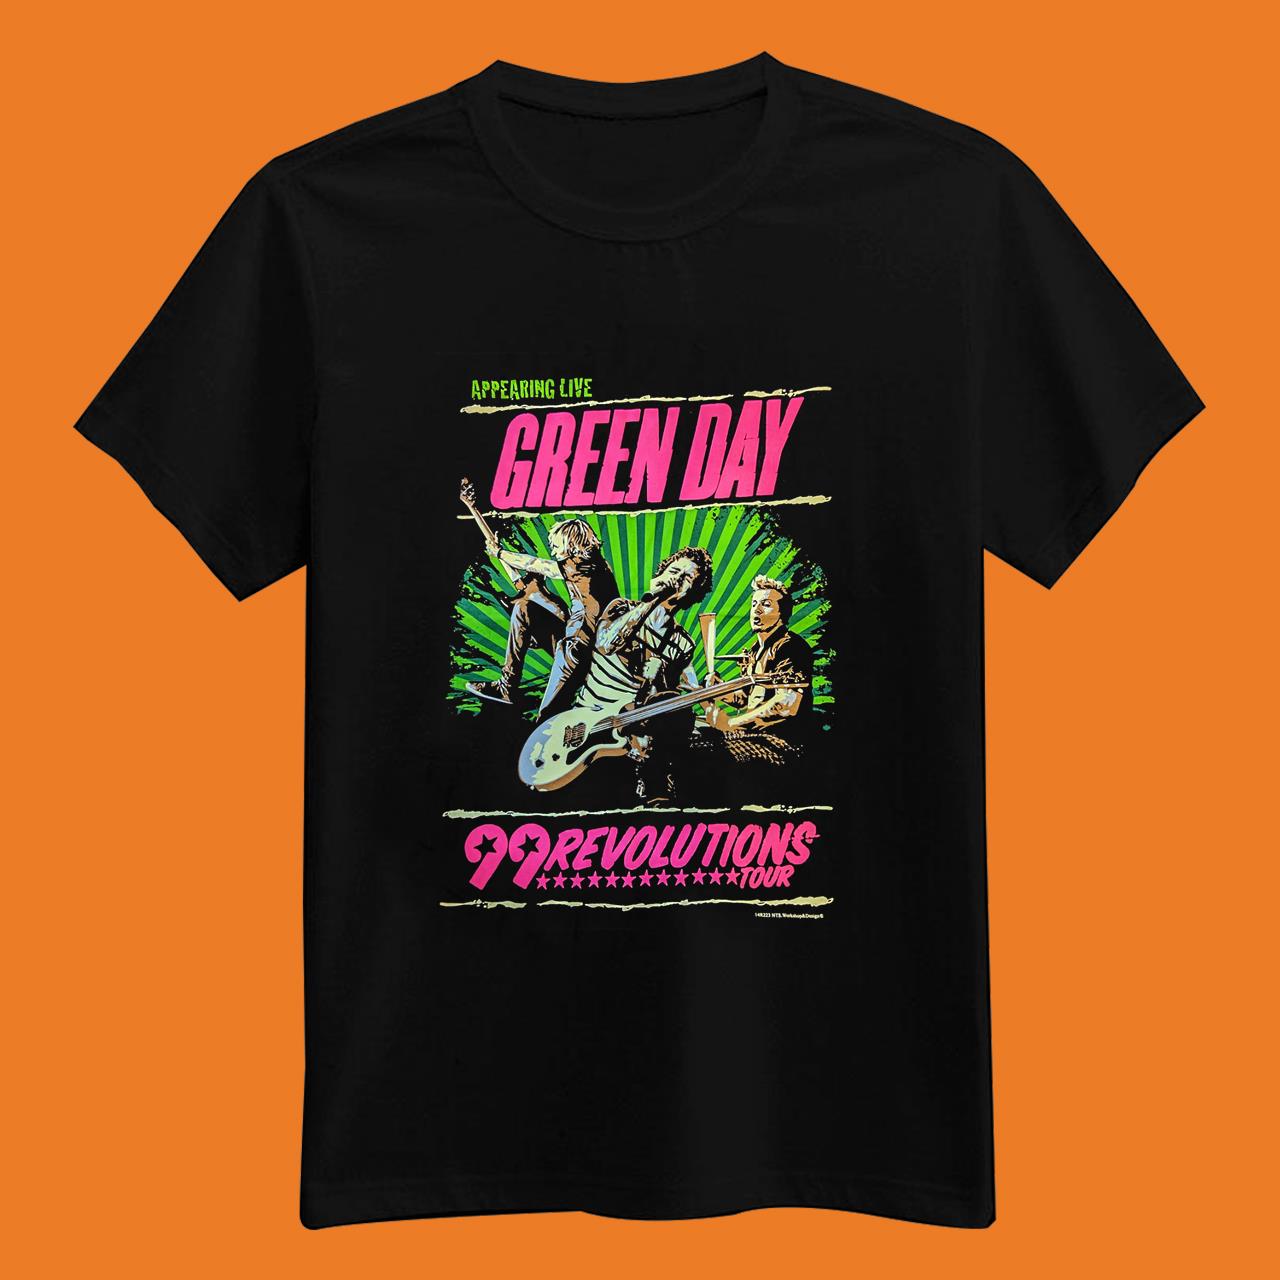 Green Day 99 Revolutions Tour Original New Type System T-shirt